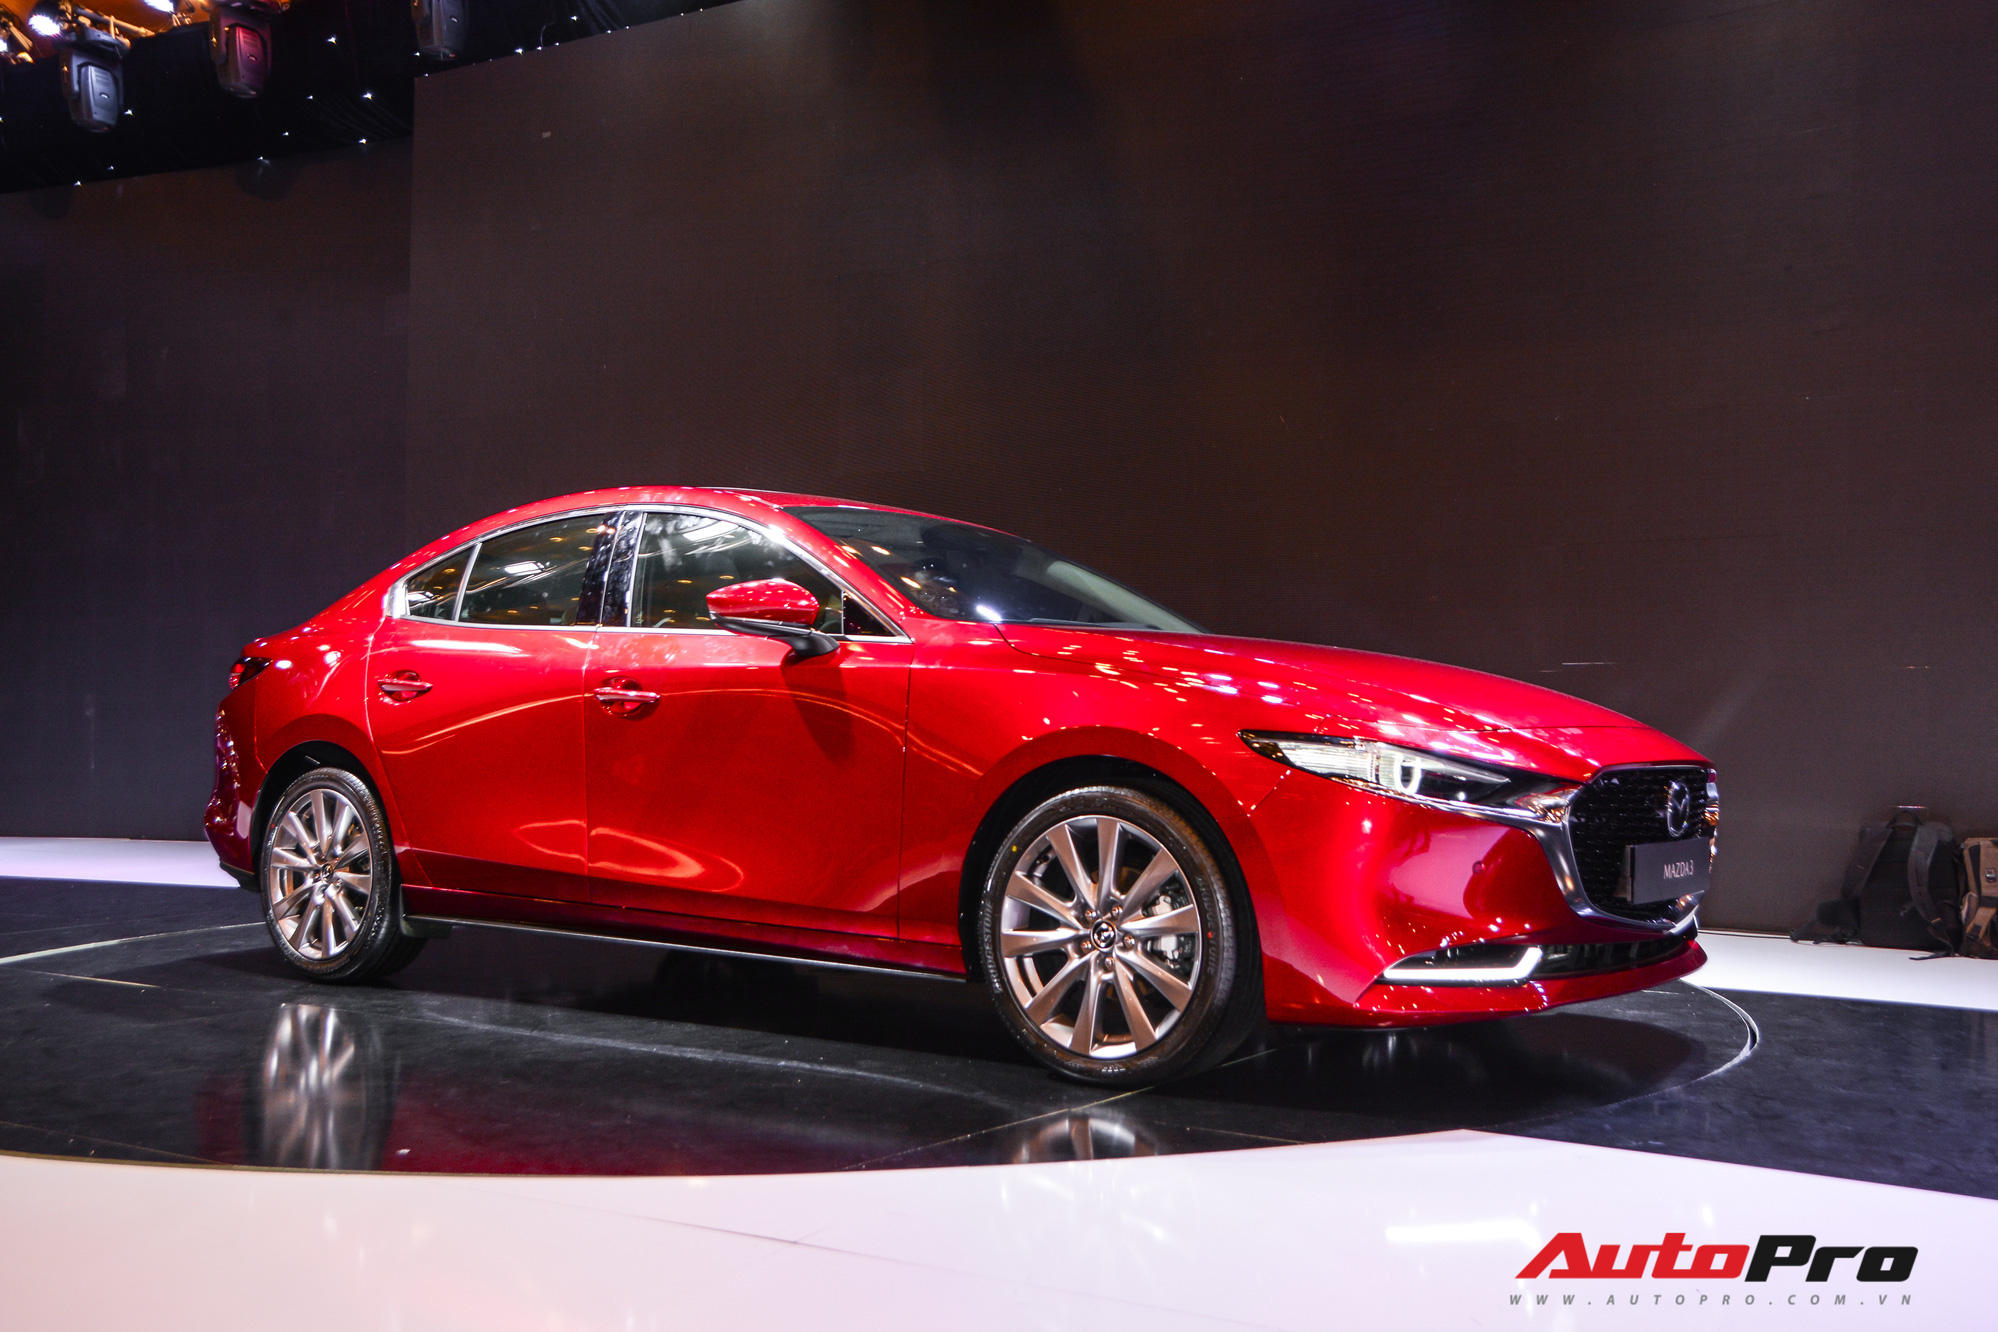 Sedan hạng C tháng 2/2021: Mazda3 suýt lật đổ vua doanh số Kia Cerato